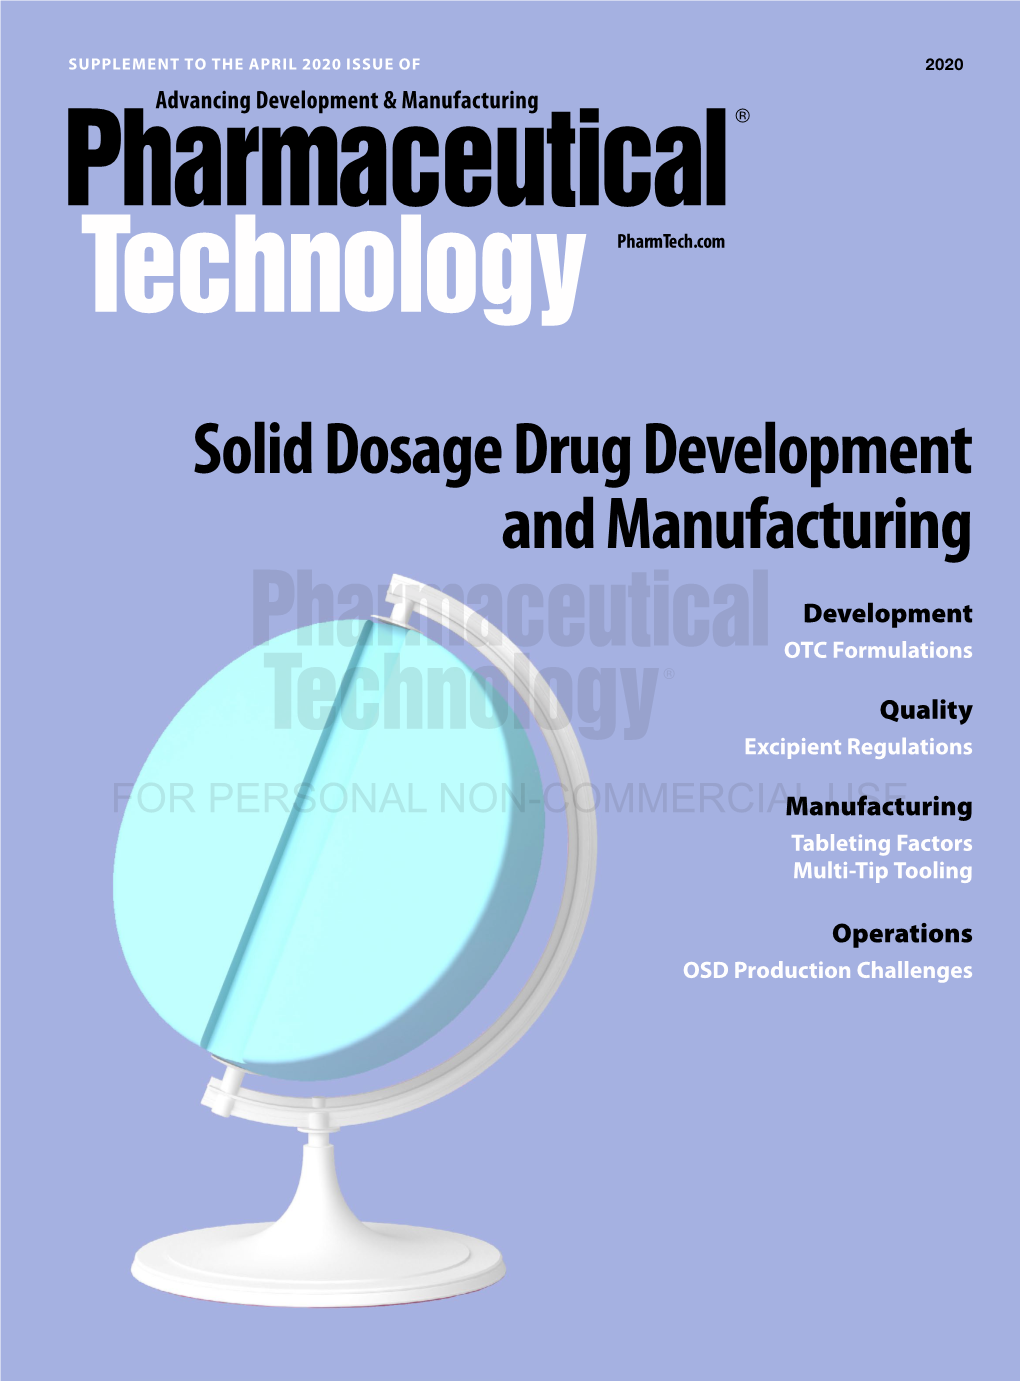 Solid Dosage Drug Development and Manufacturing